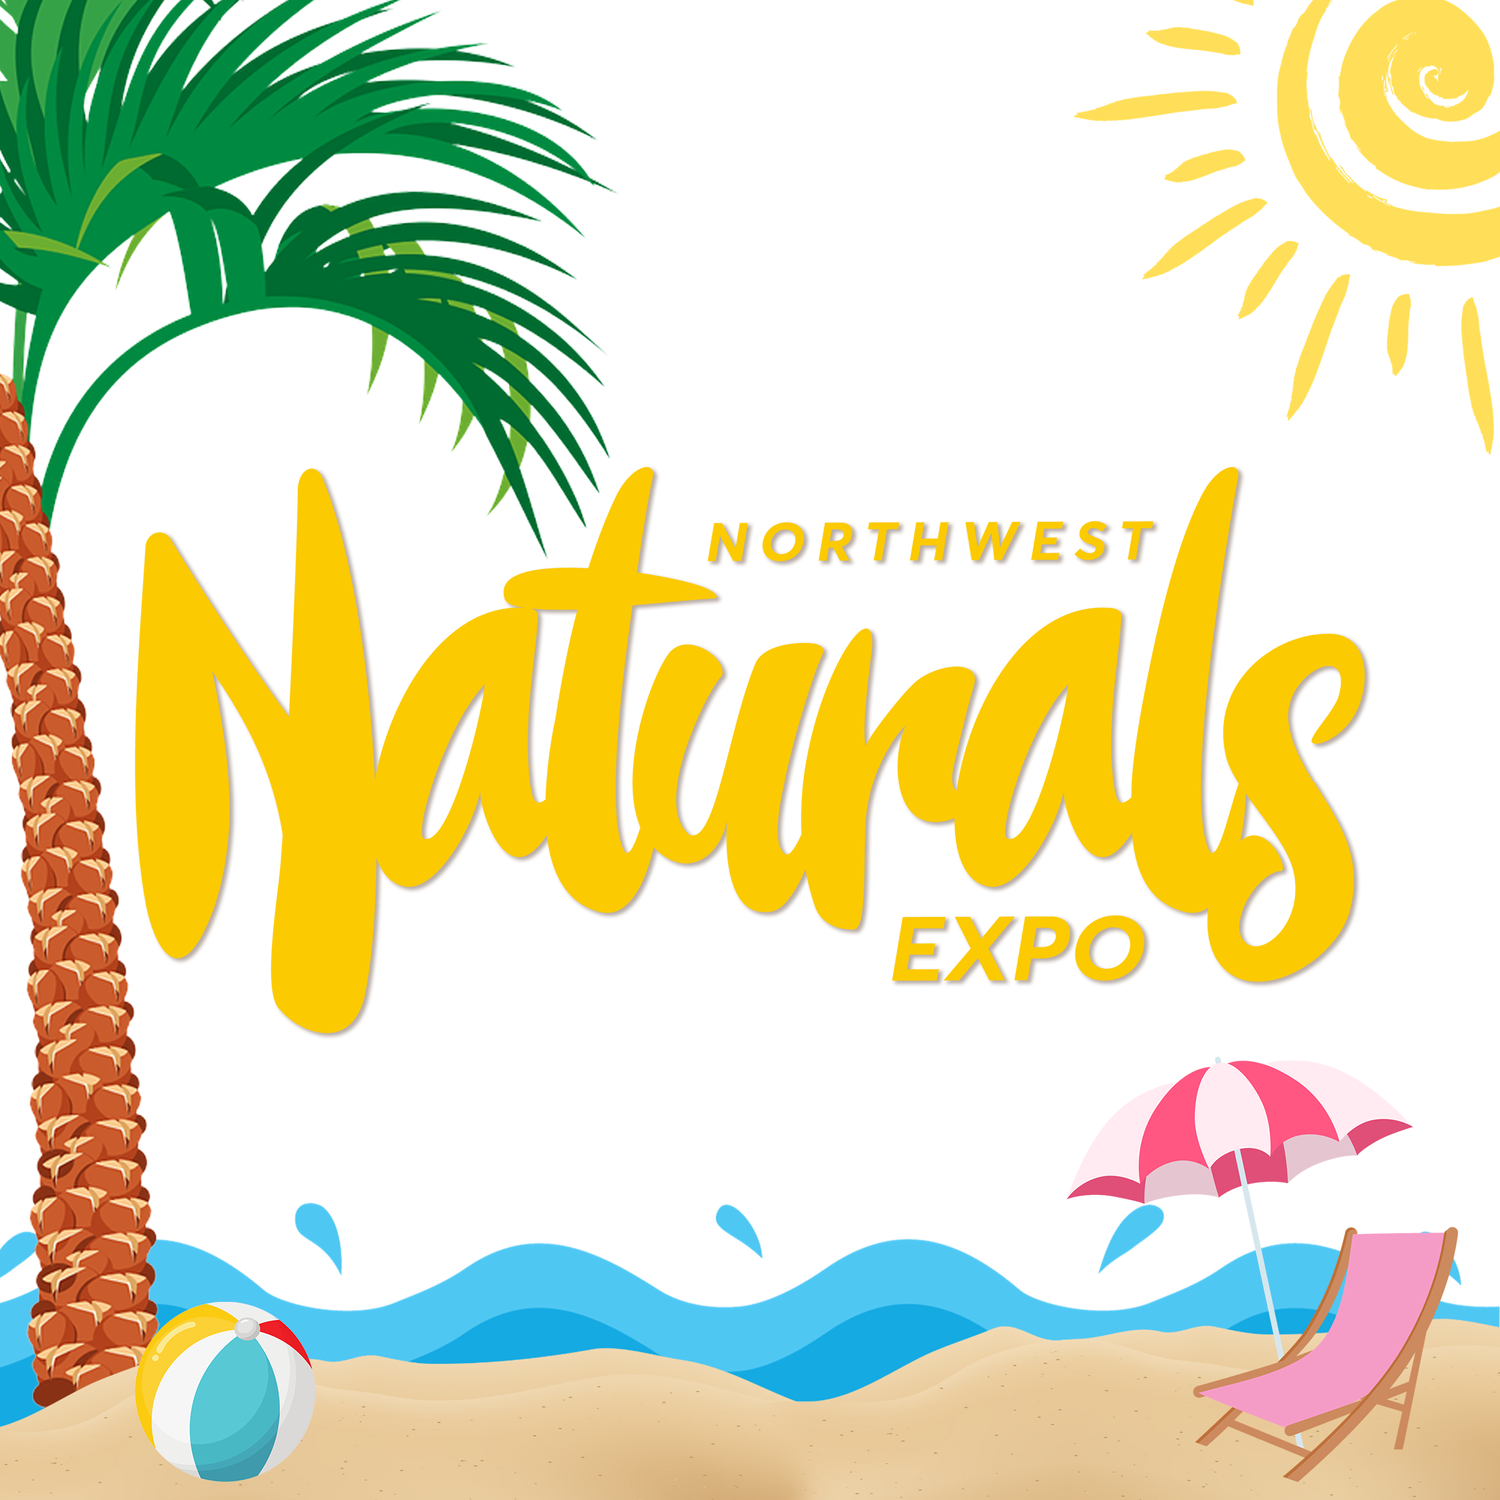 Northwest Naturals Expo - Hello Sunshine